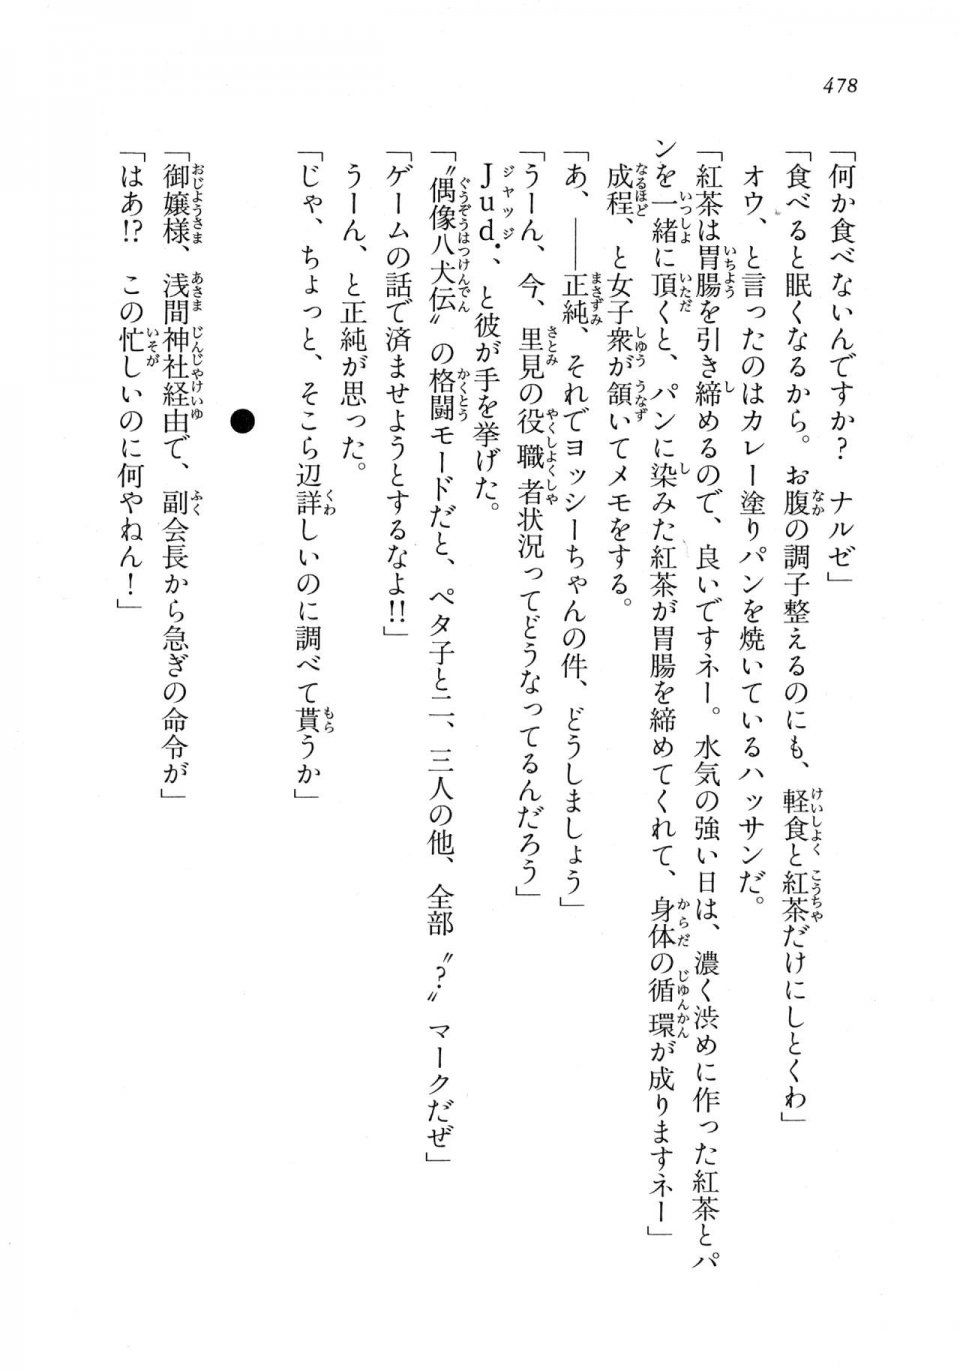 Kyoukai Senjou no Horizon LN Vol 18(7C) Part 1 - Photo #478